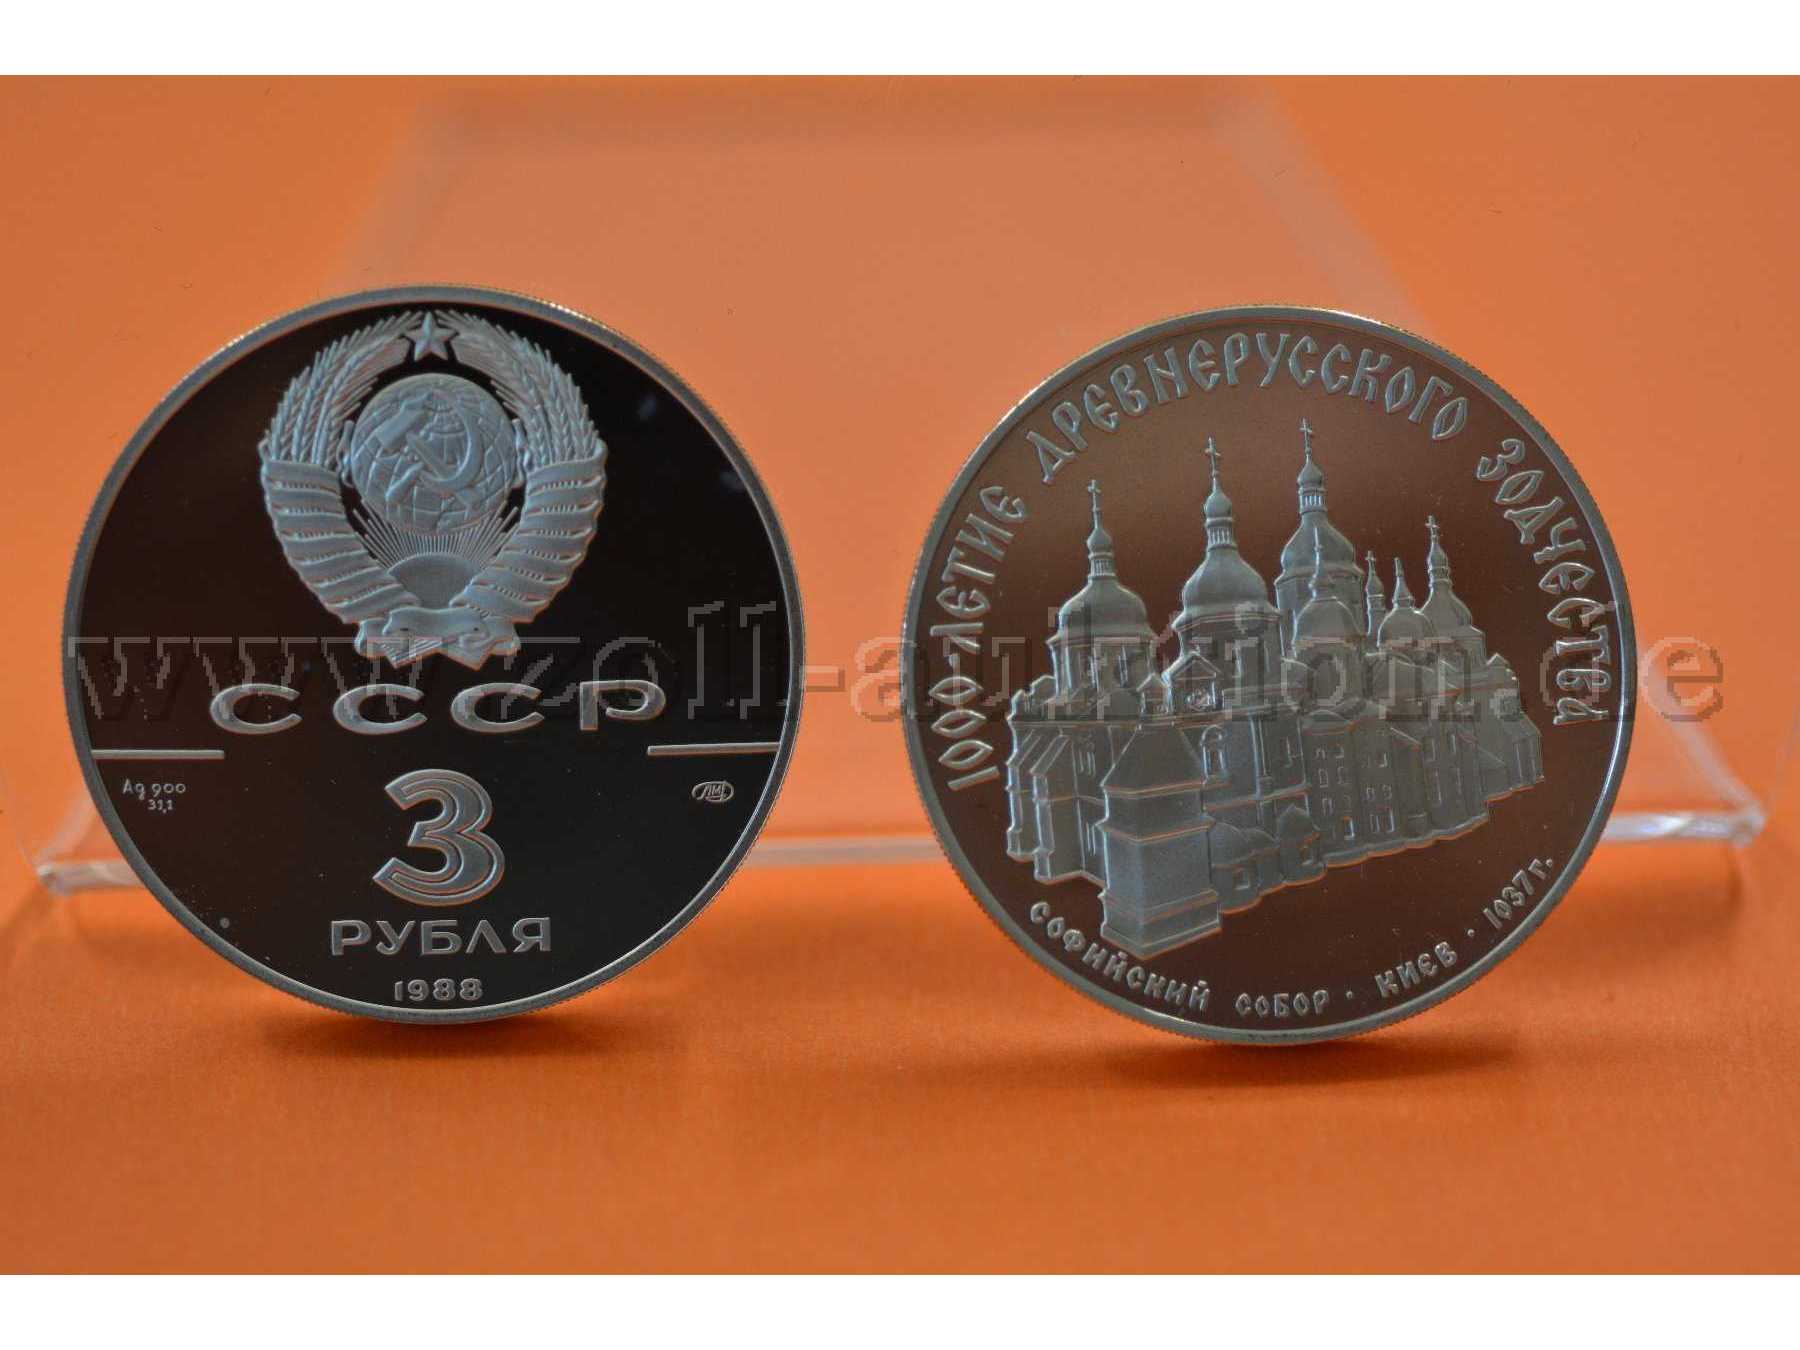 3 Rubel Münze:
-Staatswappen
-Kathedrale Kiew